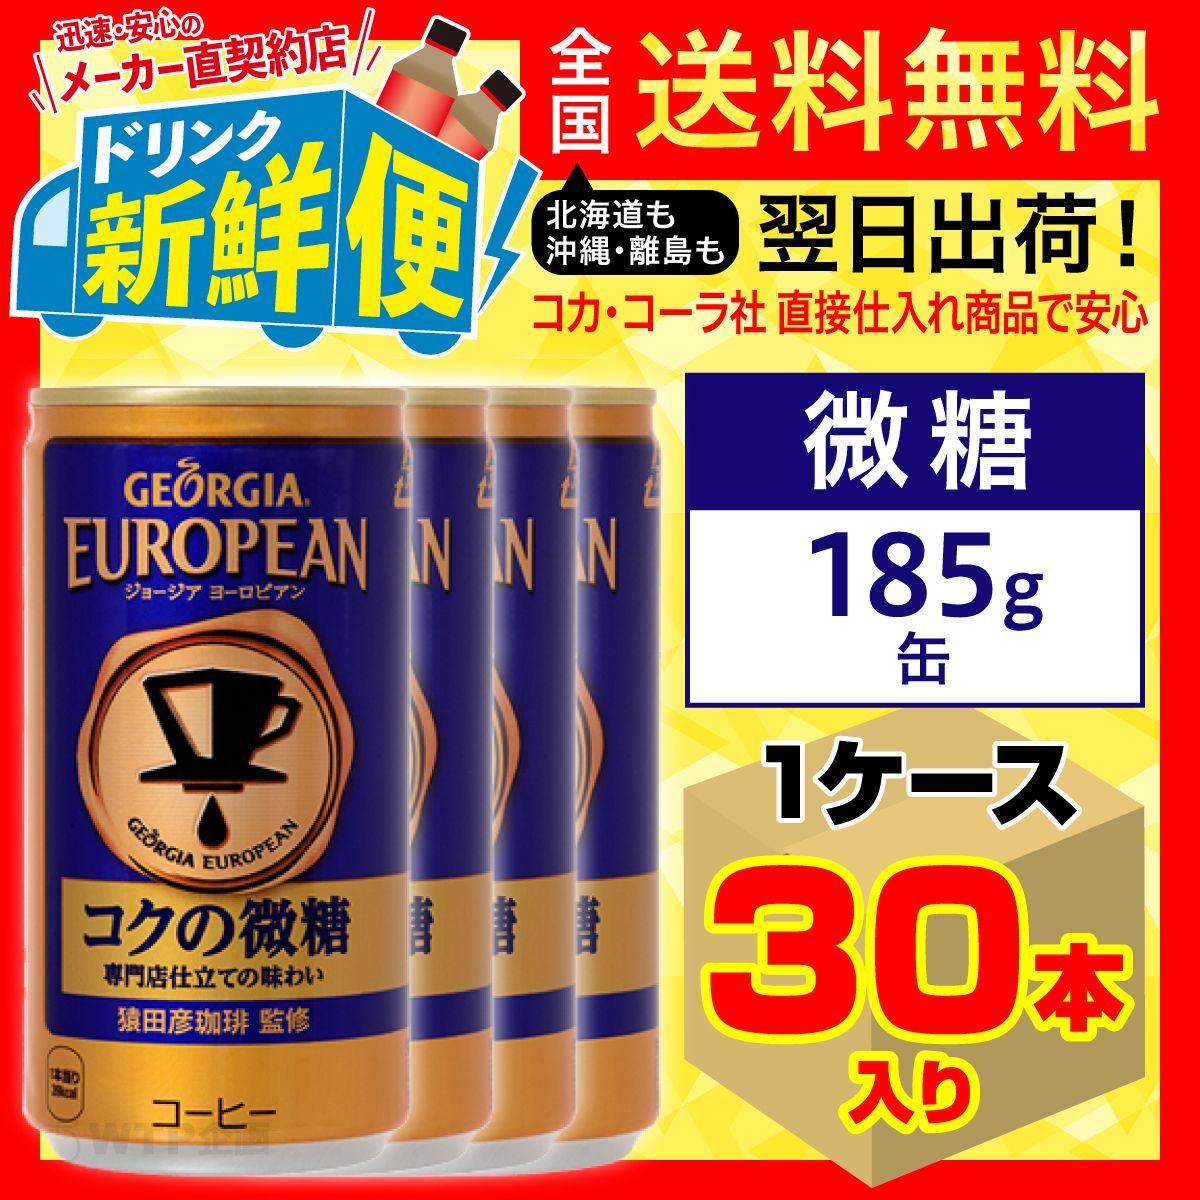 SALE／60%OFF】 コカコーラ 当たり缶 プレイボタン16.18 cerkafor.com